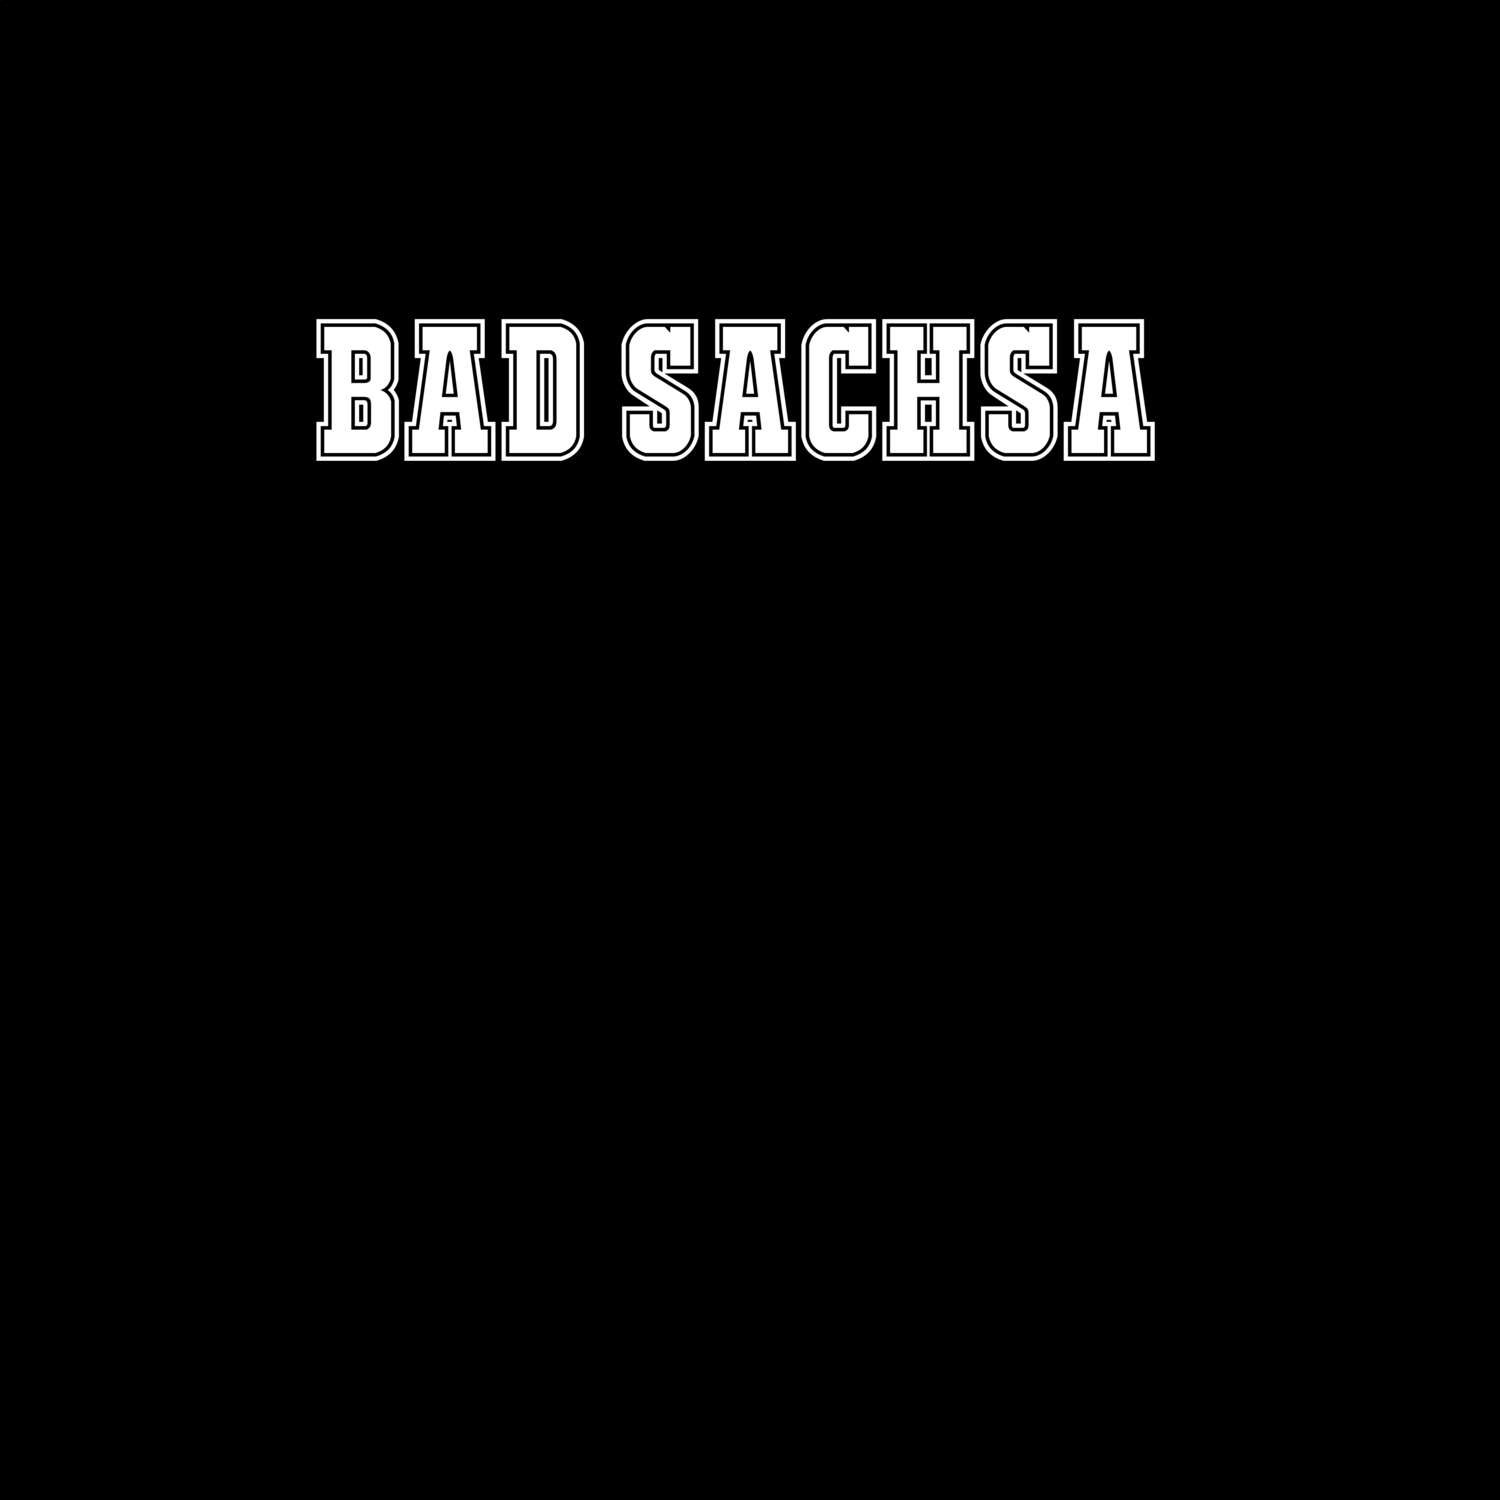 Bad Sachsa T-Shirt »Classic«